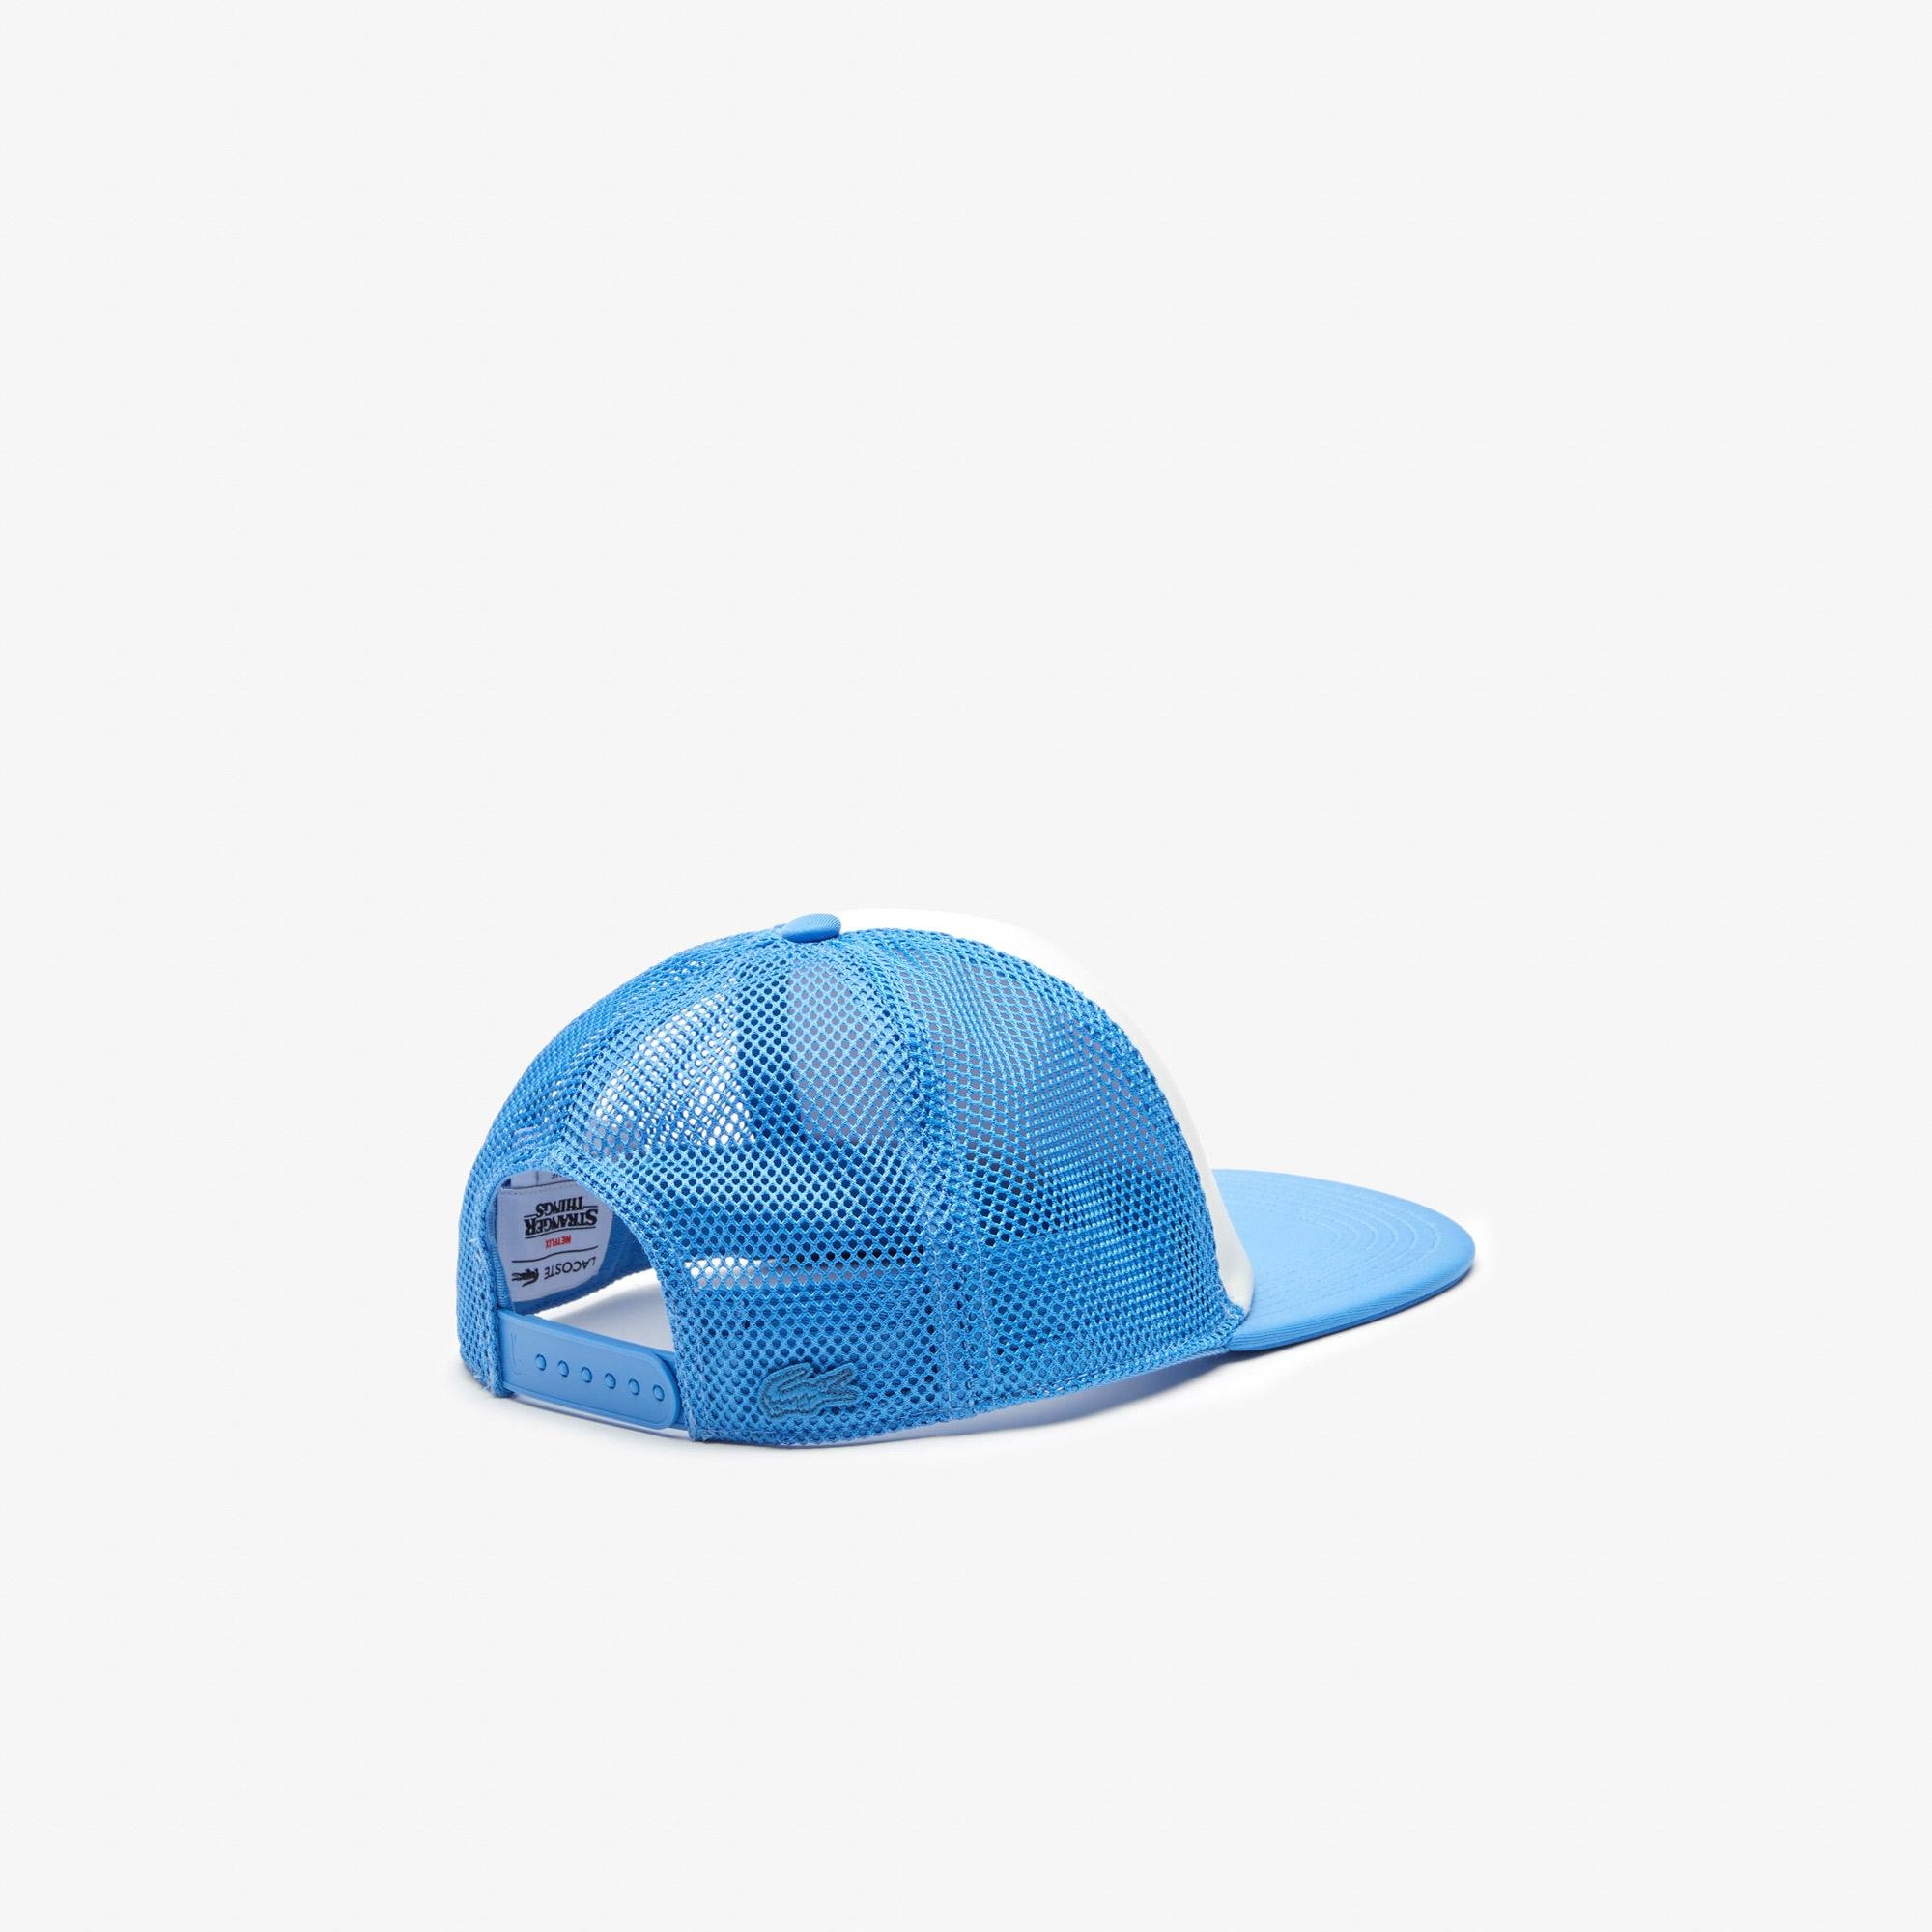 Lacoste x Netflix Erkek Baskılı Mavi Şapka